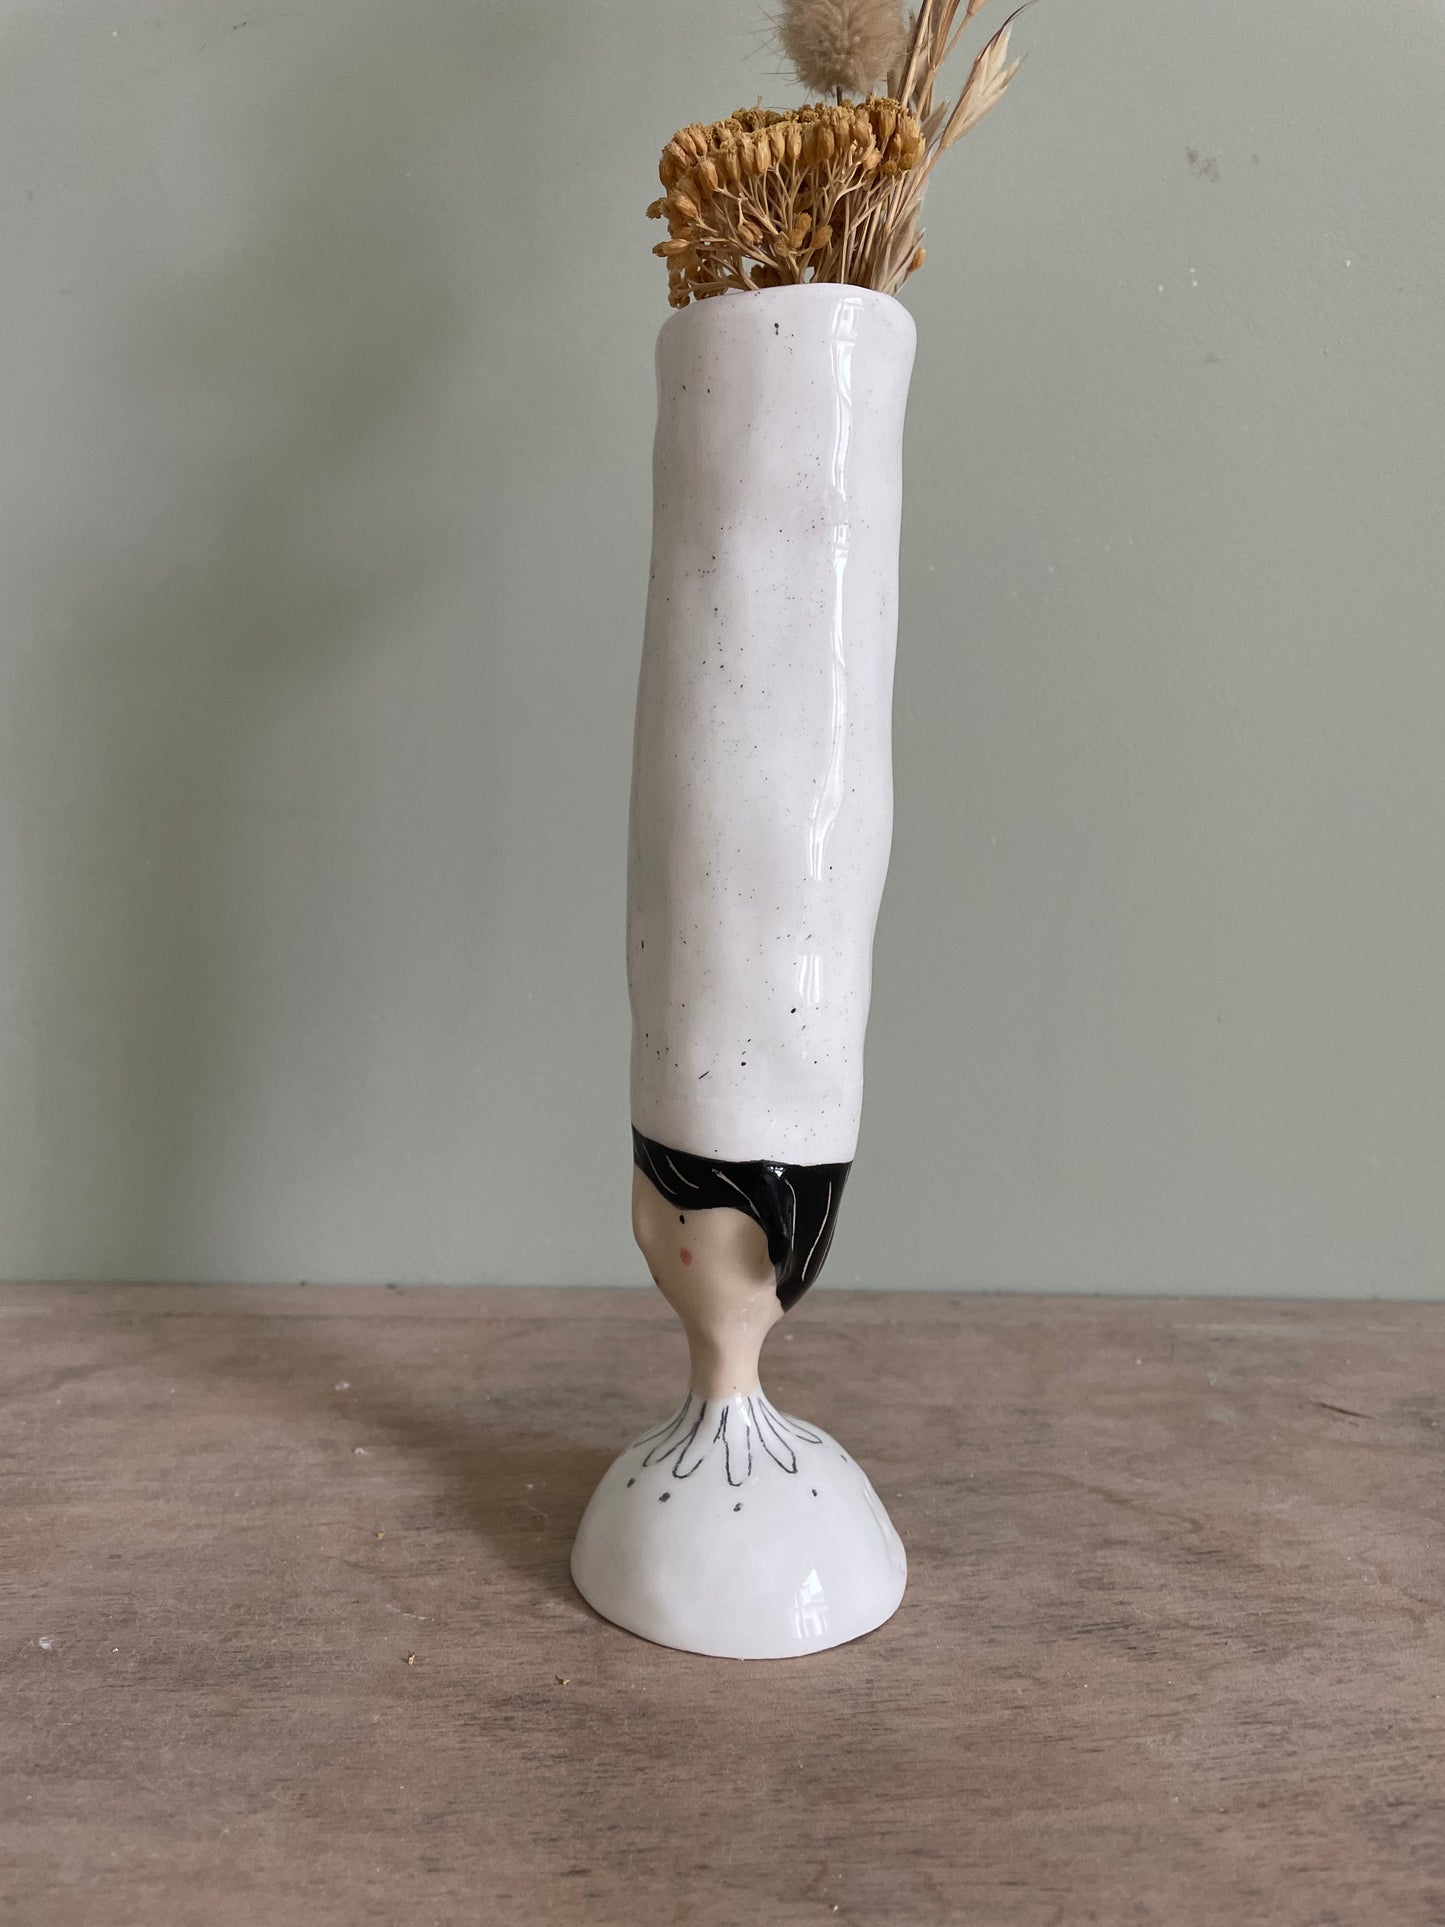 Soliflore cat with white flowers in ceramic glazed vase